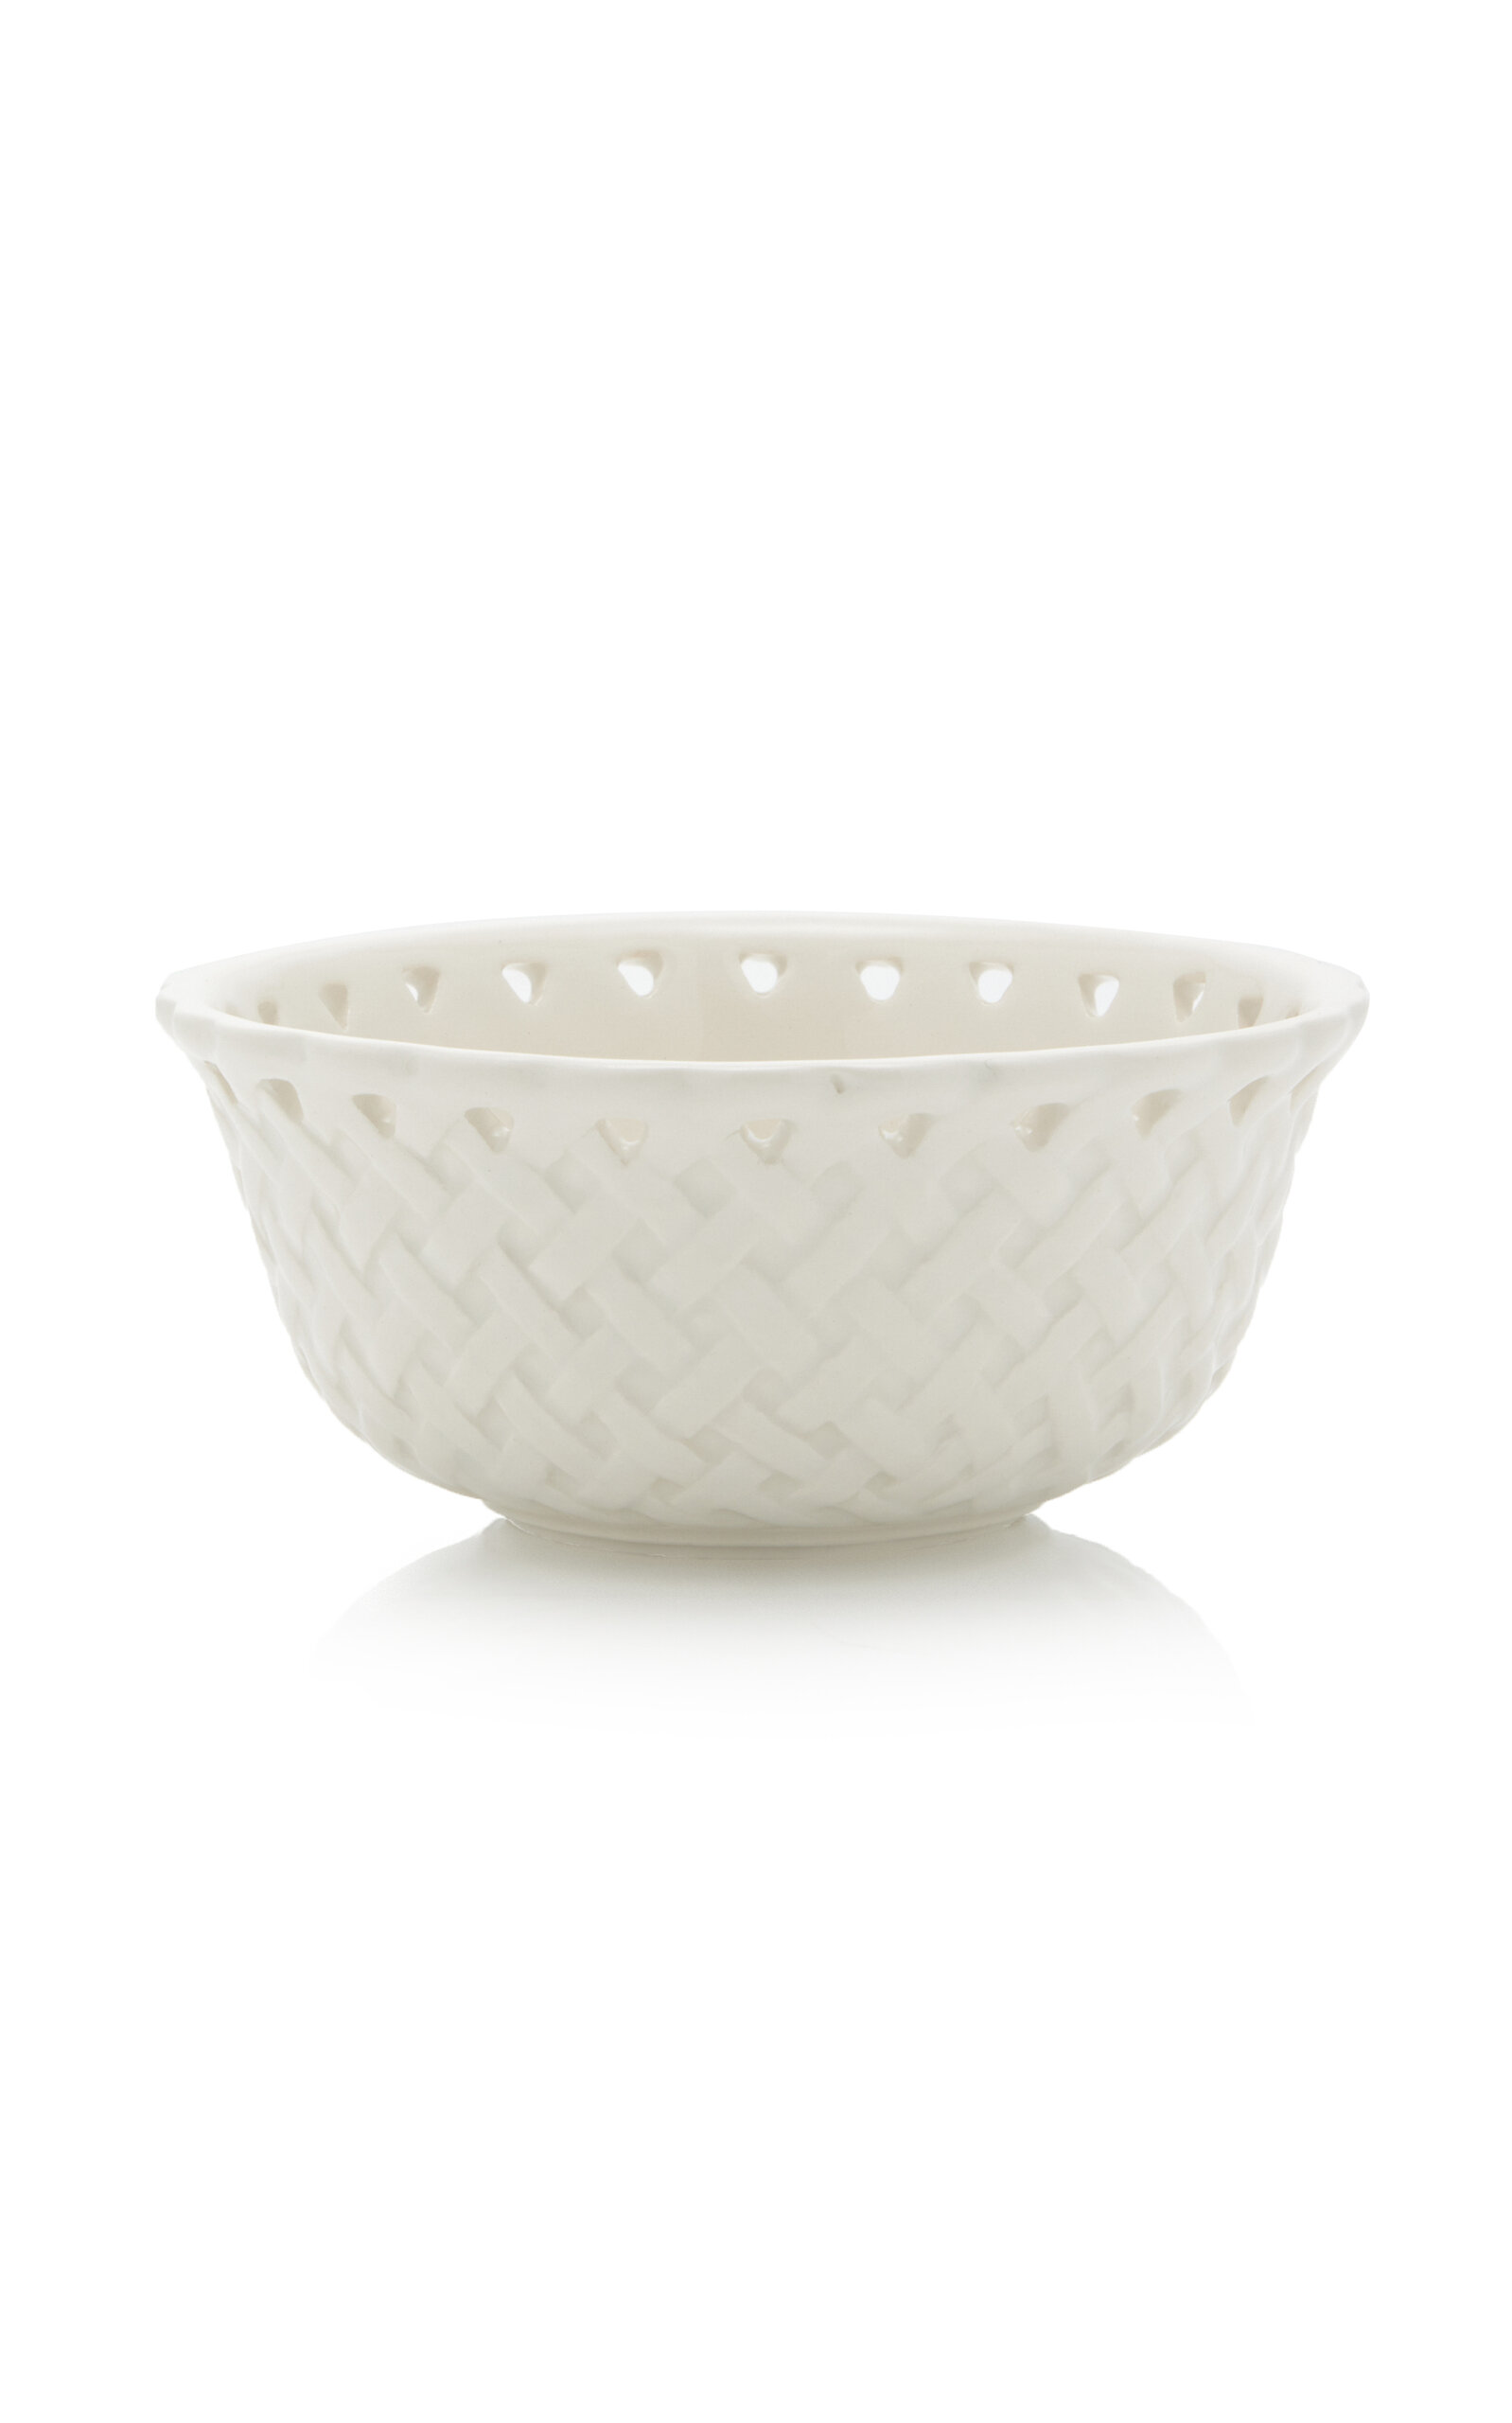 Moda Domus Openwork Creamware Consommé Bowl In White